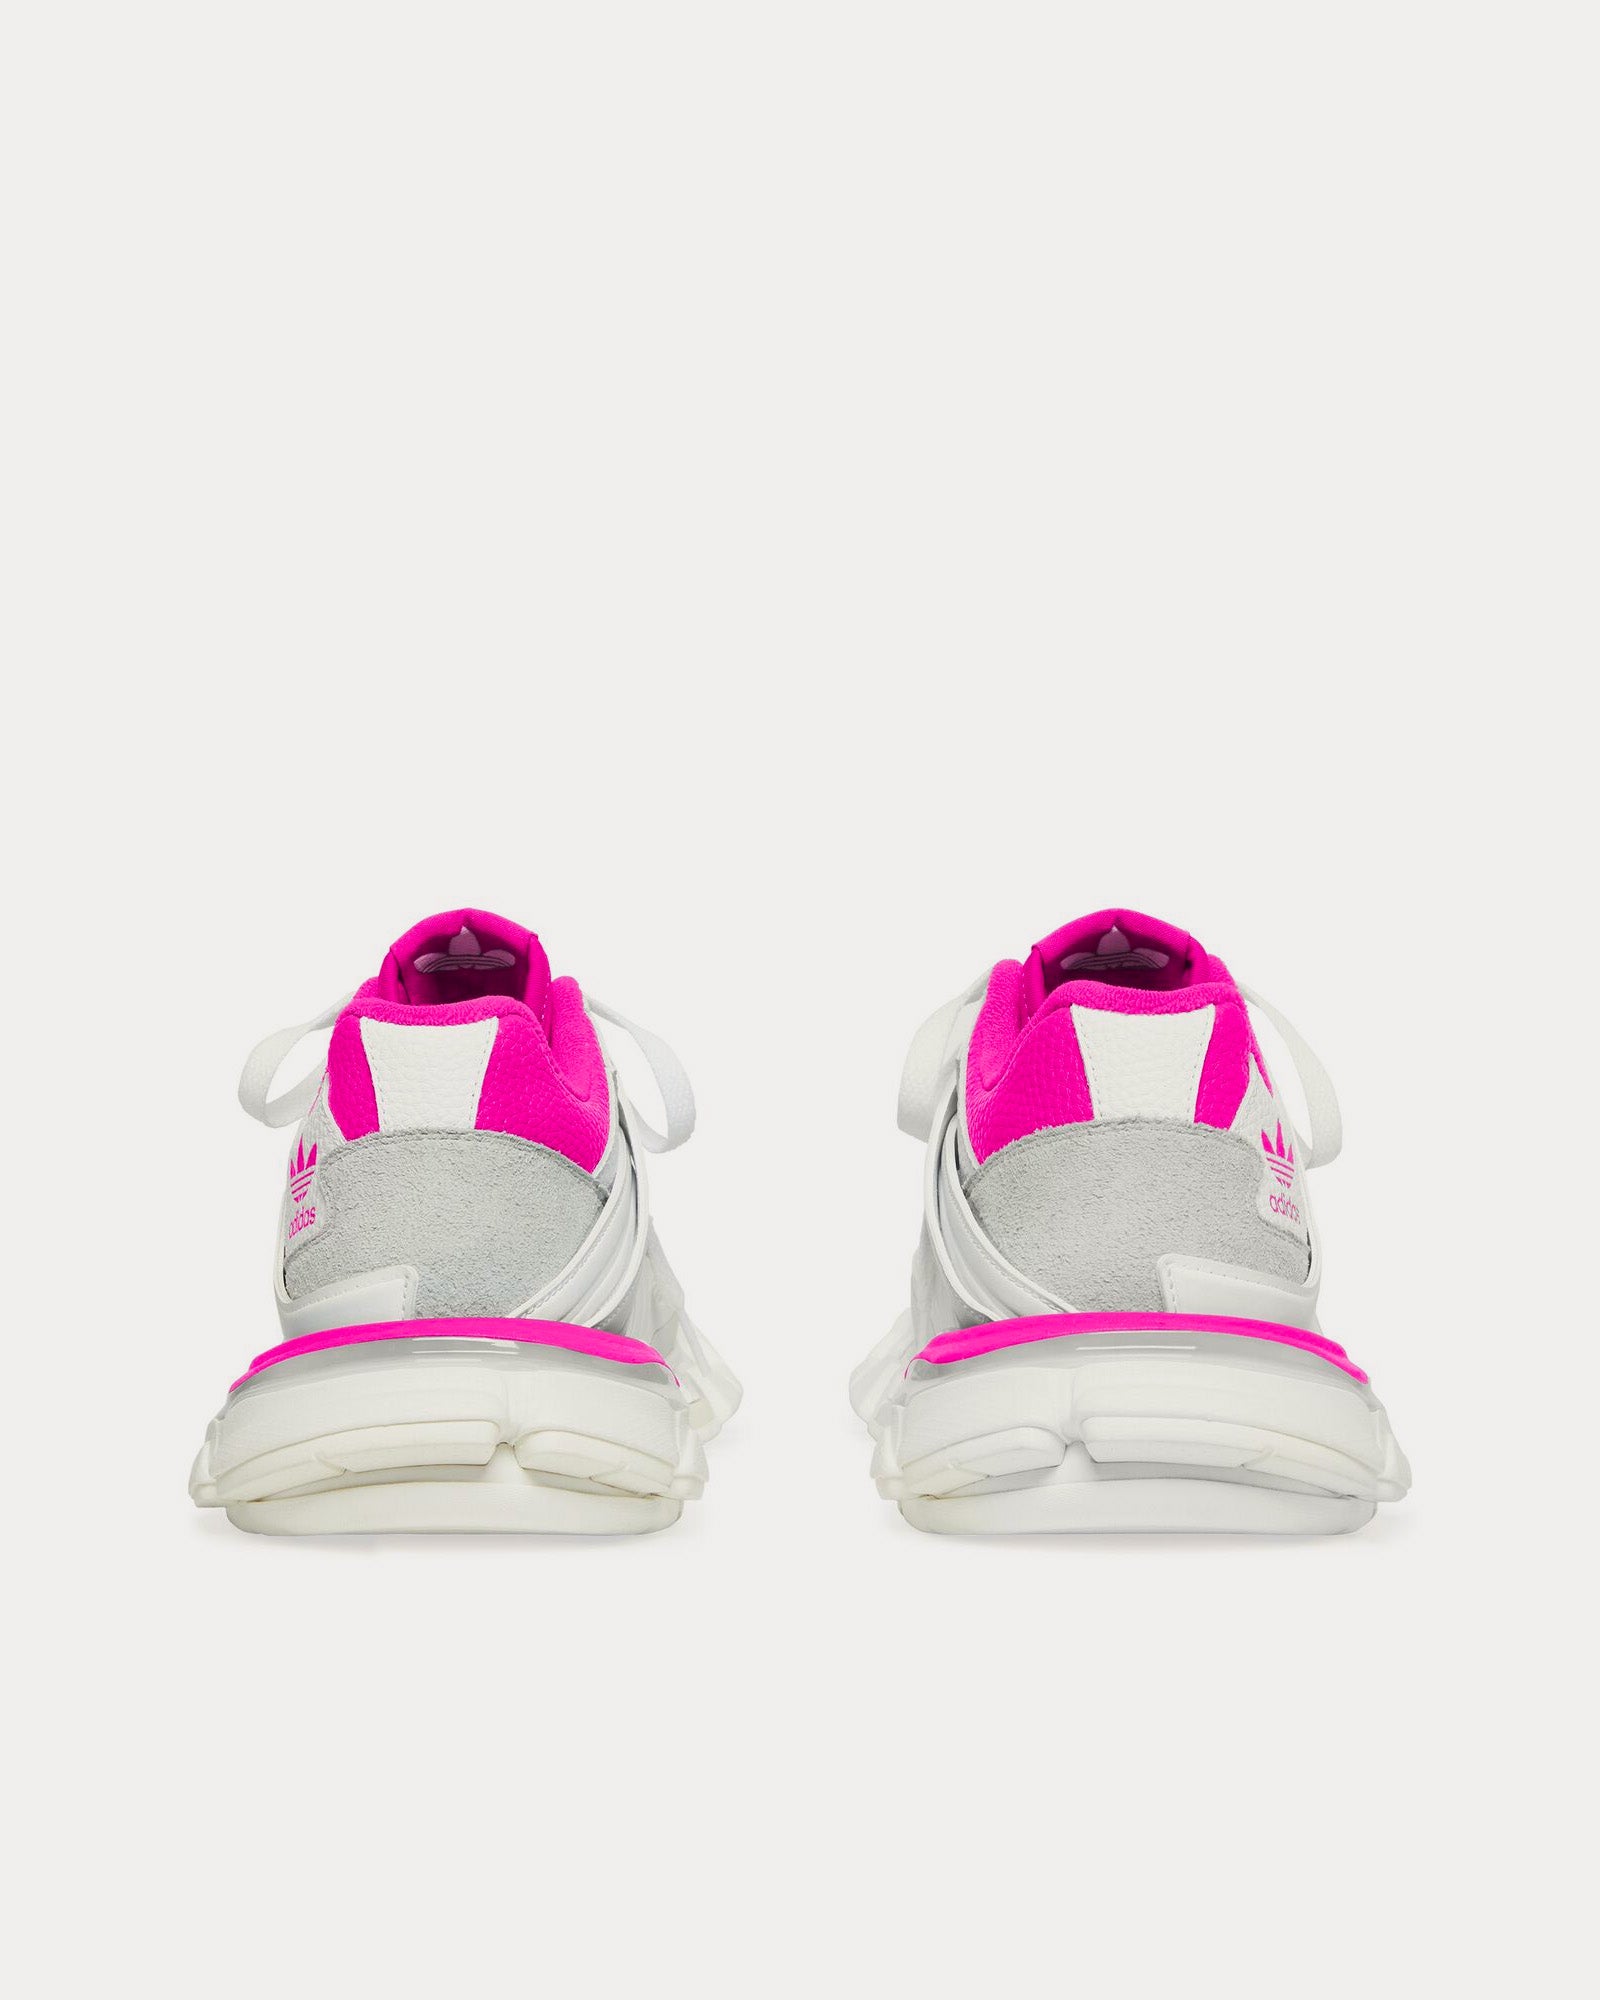 Balenciaga x Adidas - Track Forum White / Pink Low Top Sneakers